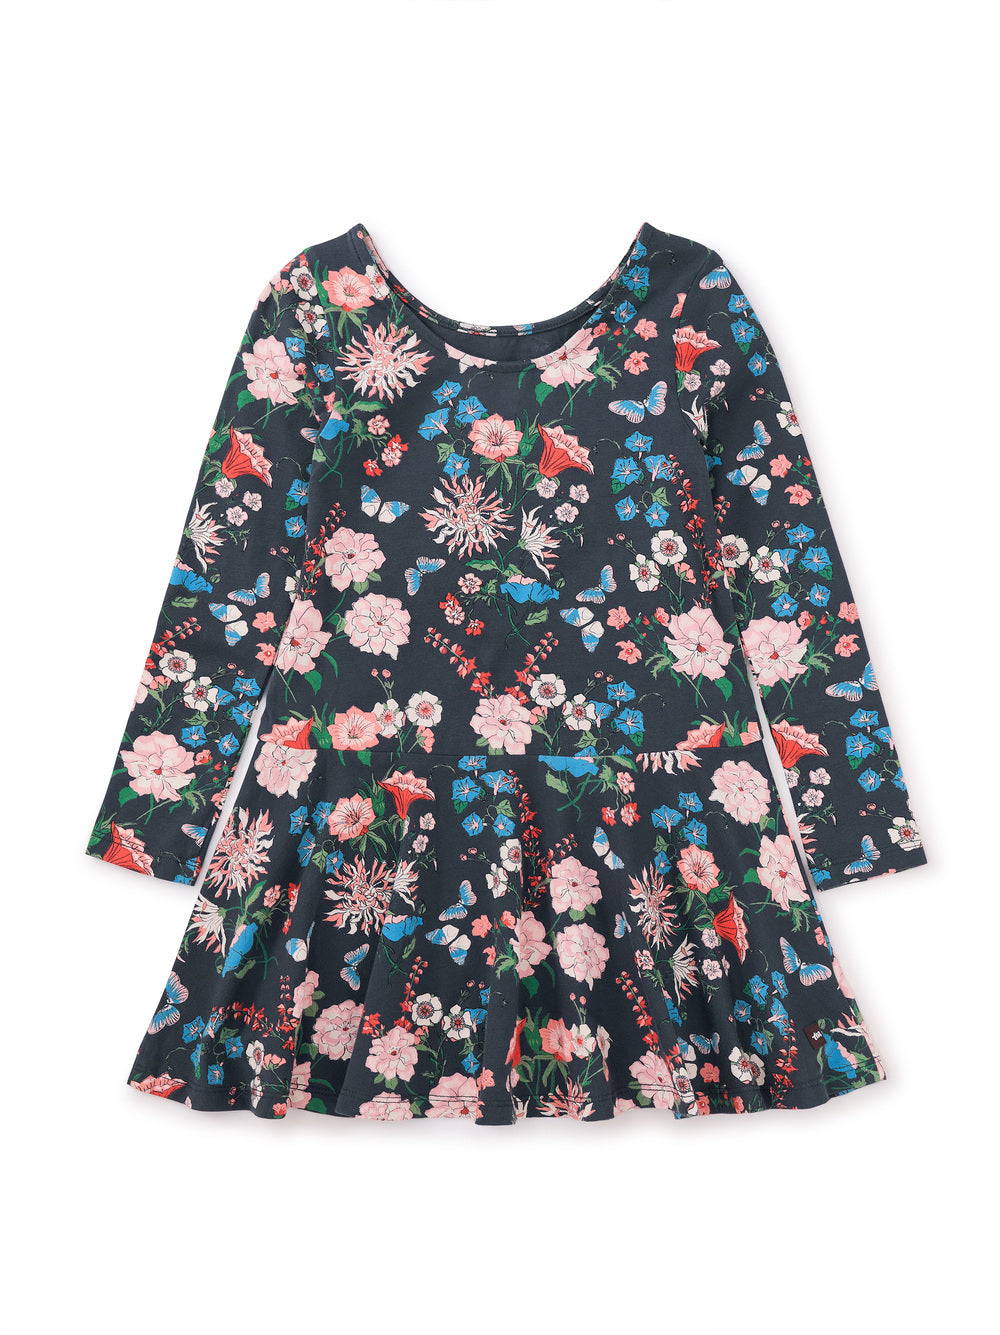 Drop Waist Skirted Baby Dress - Intricate Floral